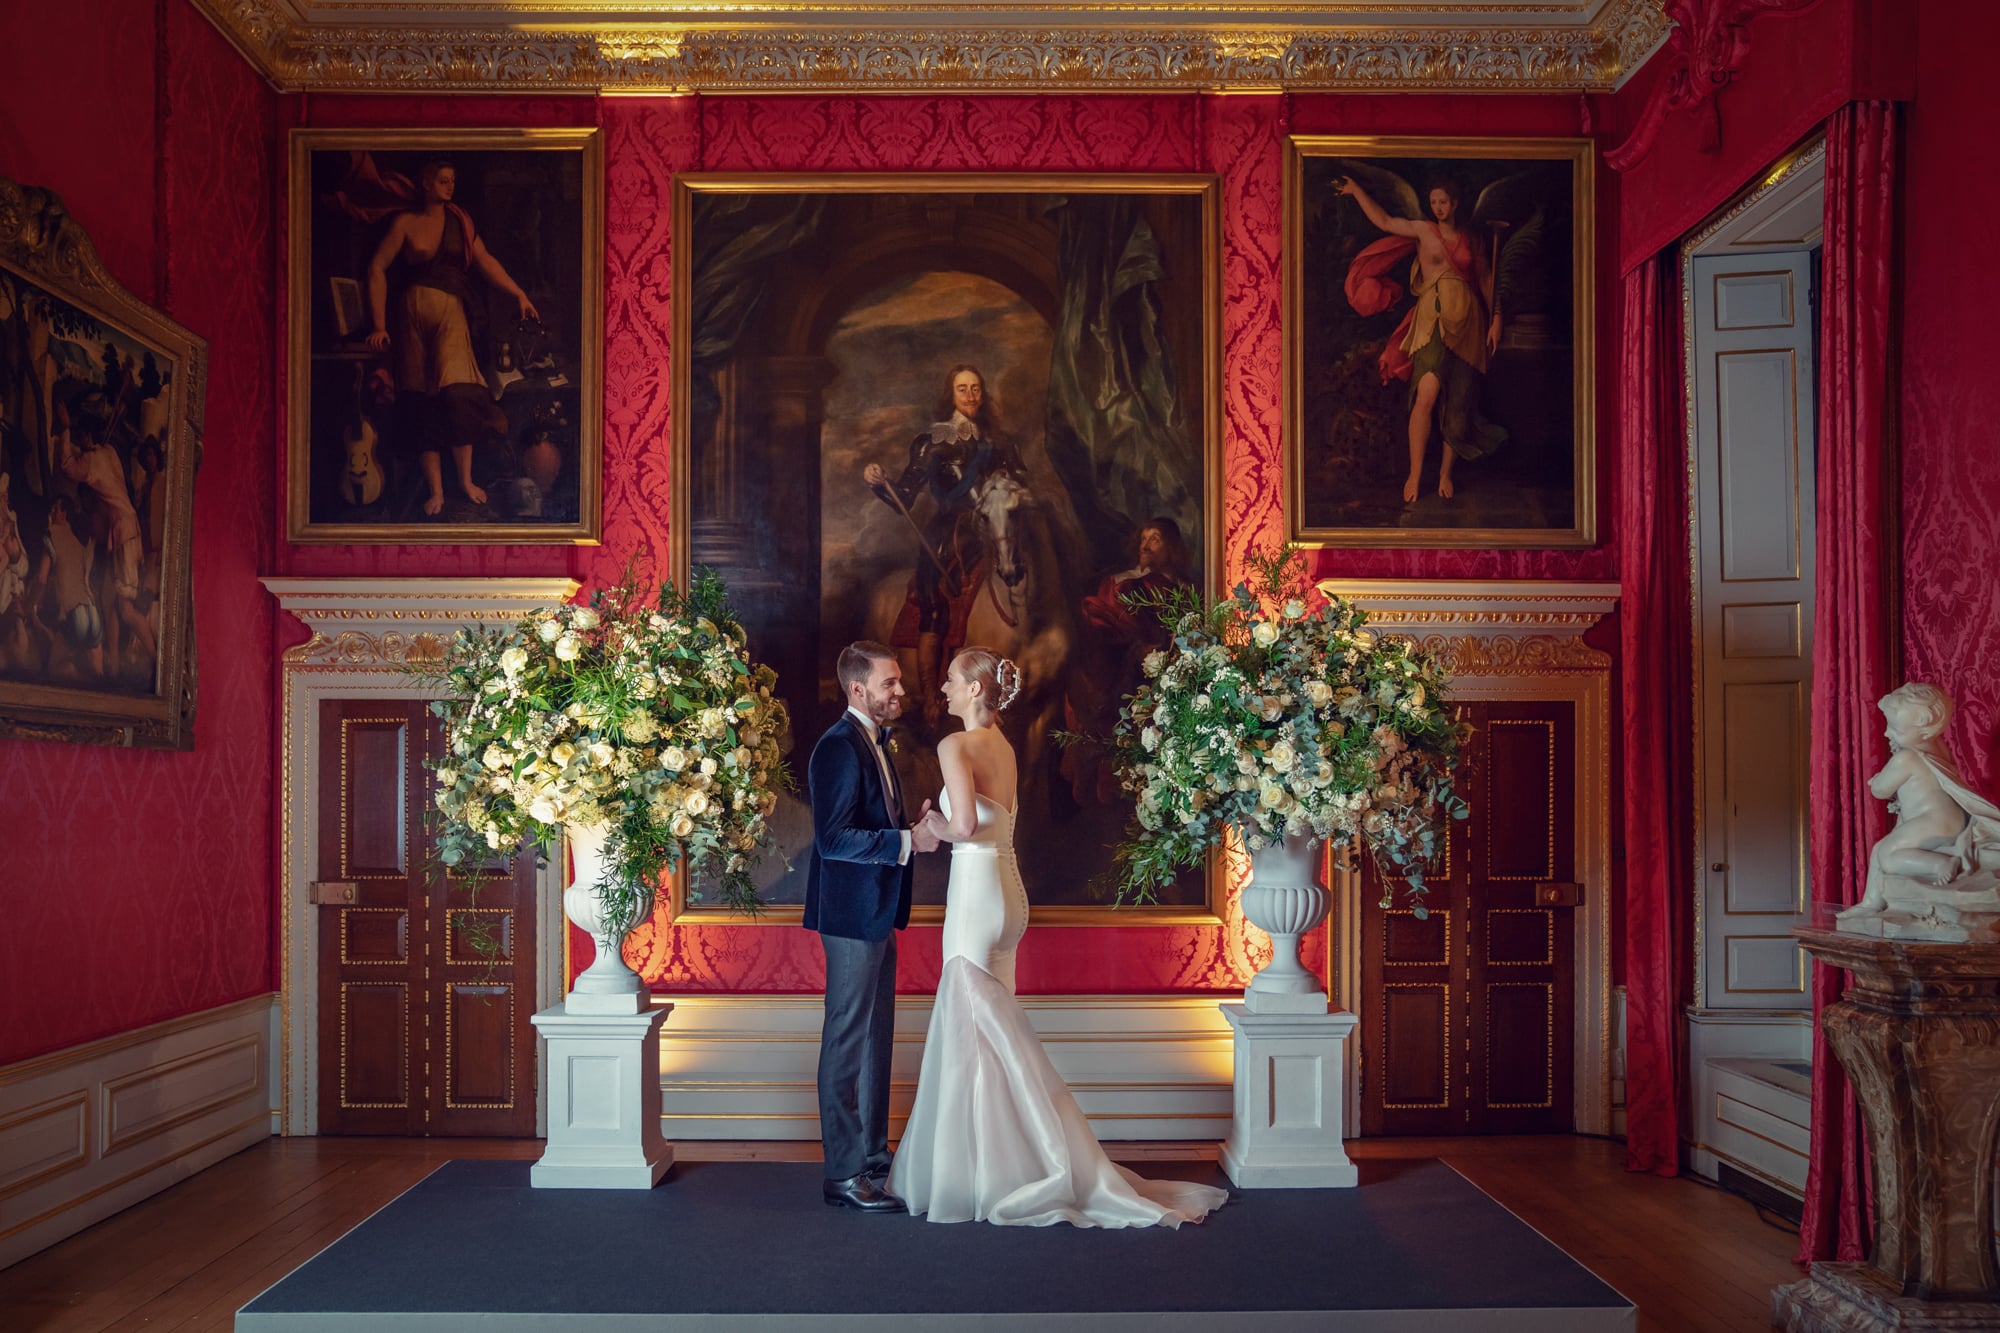 A wedding showcase at Kensington Palace